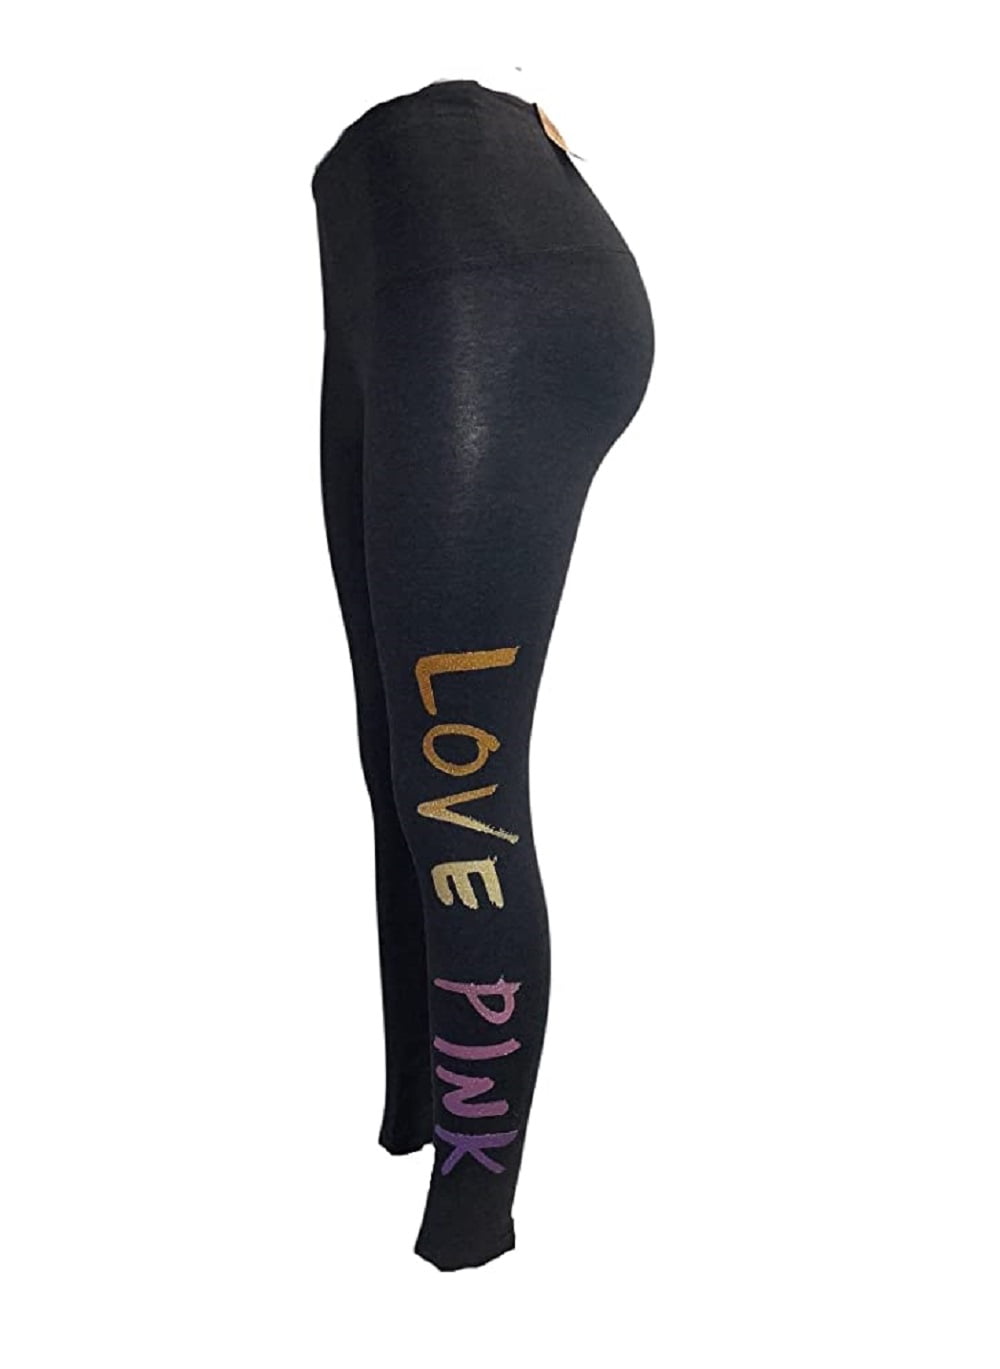 Victoria’s Secret Pink Yoga Pants Legging Small Excellent Rainbow Lettering